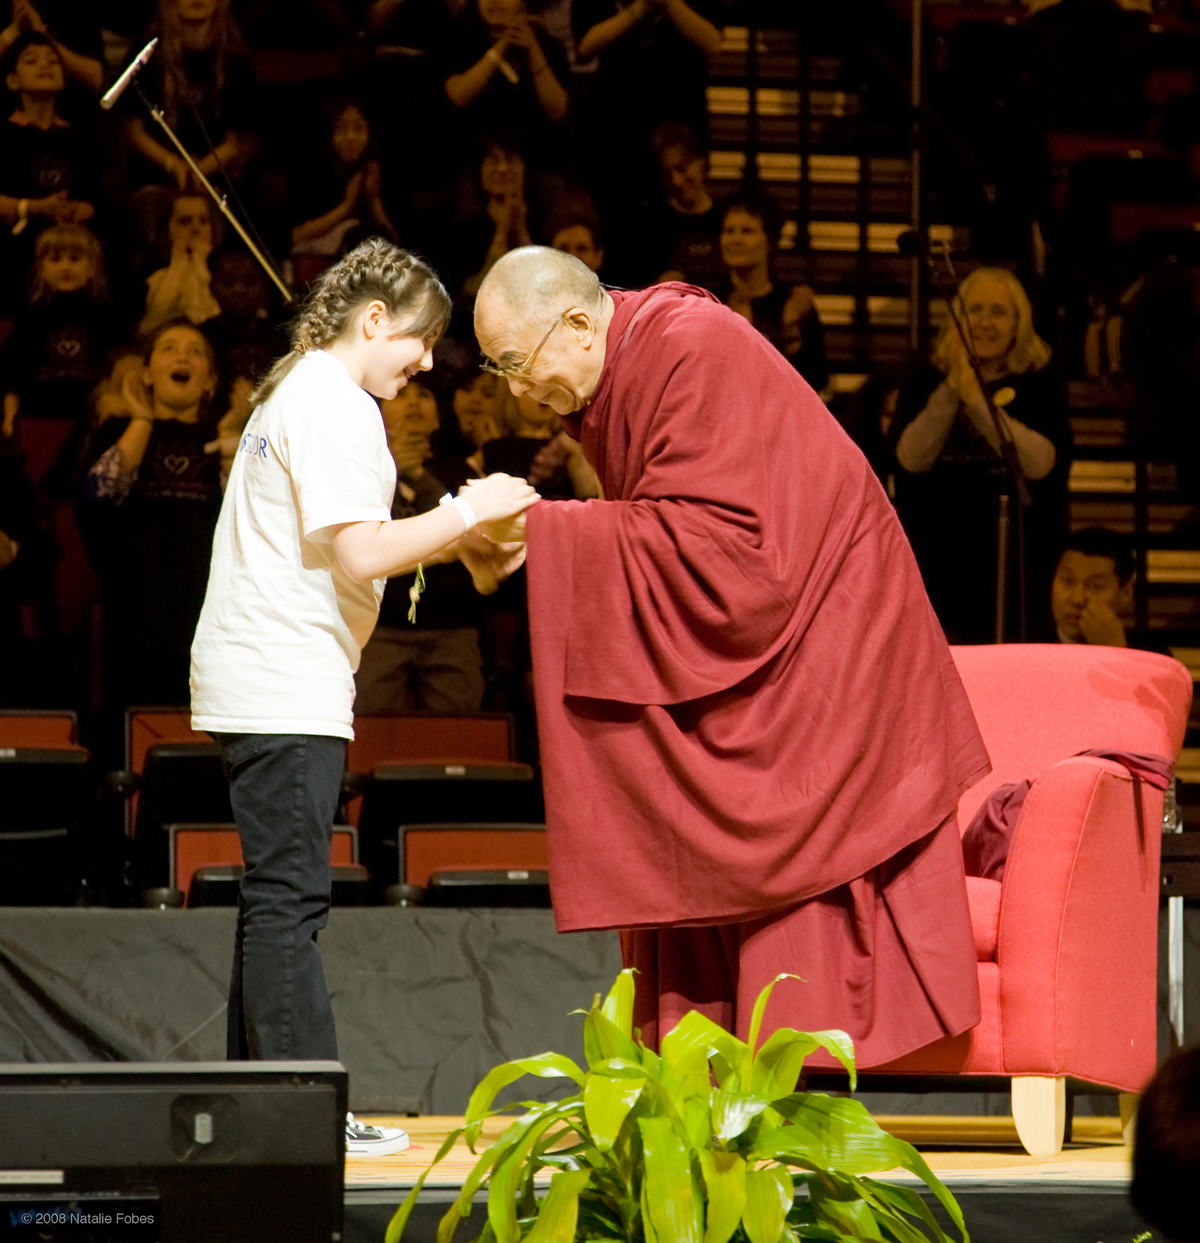 Jessica with His Holiness the Dalai Lama.